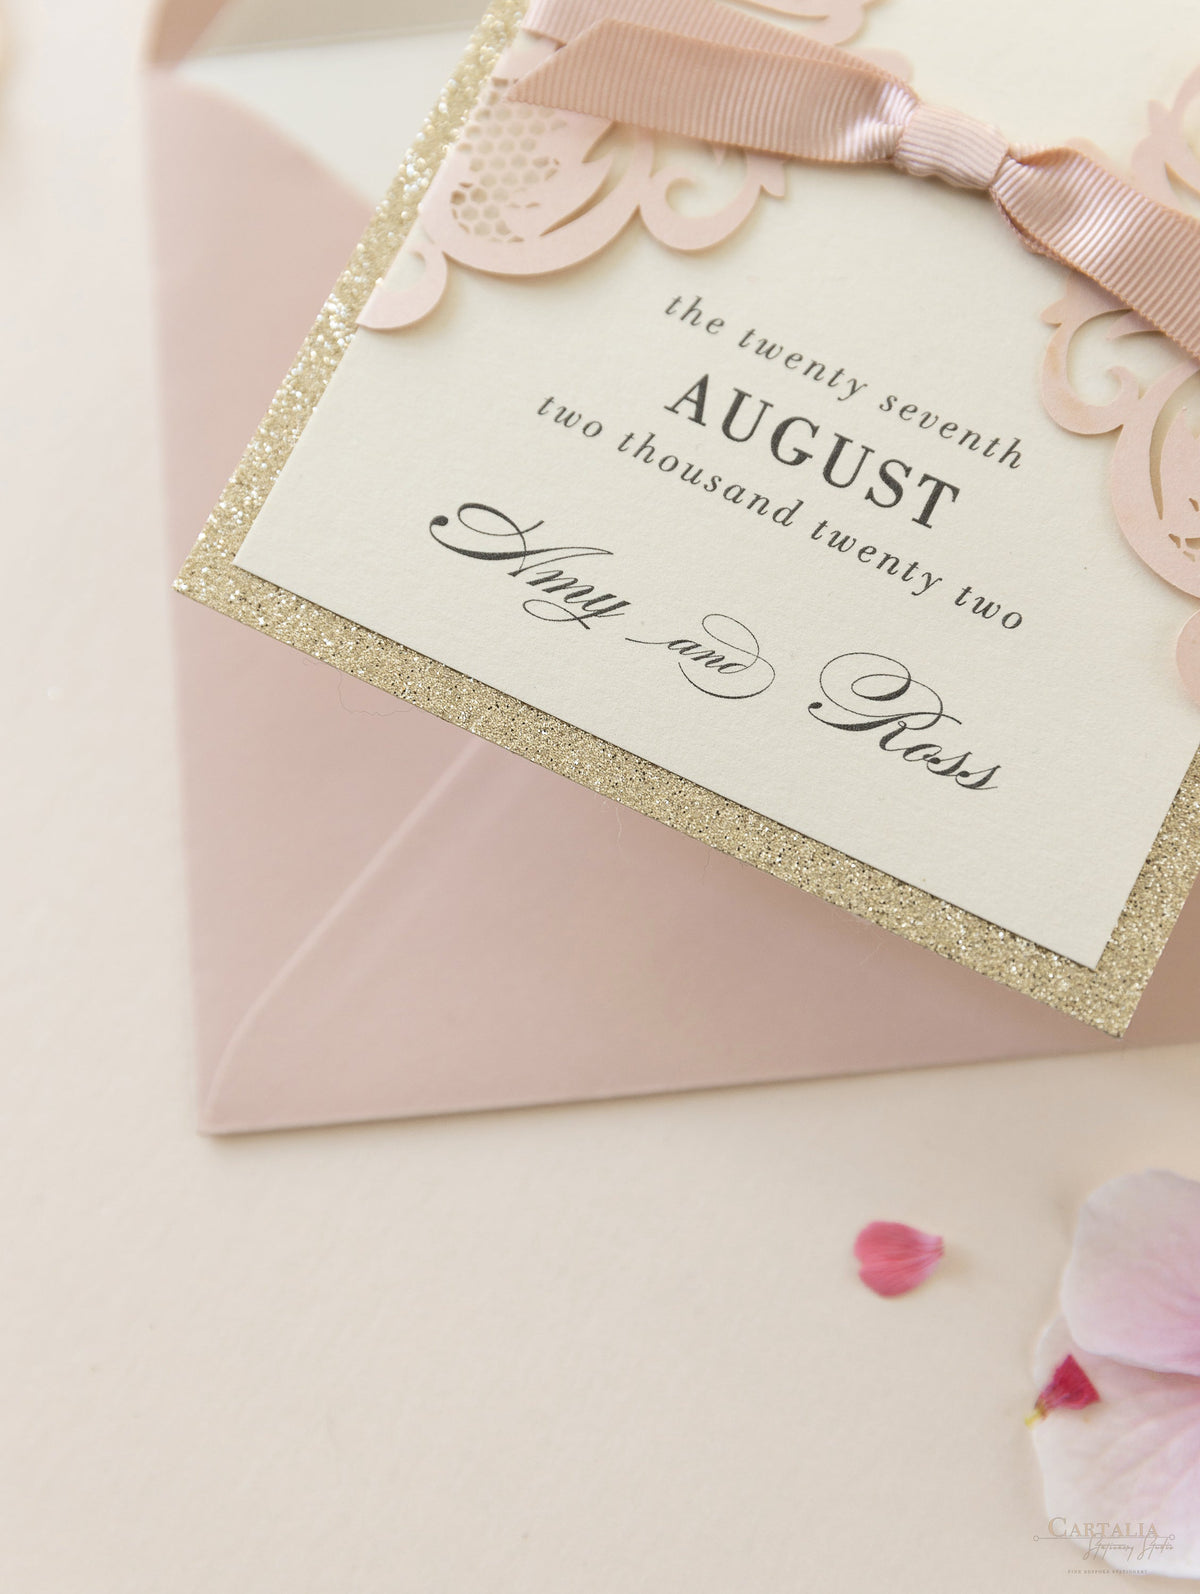 Rose Pink Opulence Luxury Gatefold Salva la data con glitter dorati e busta